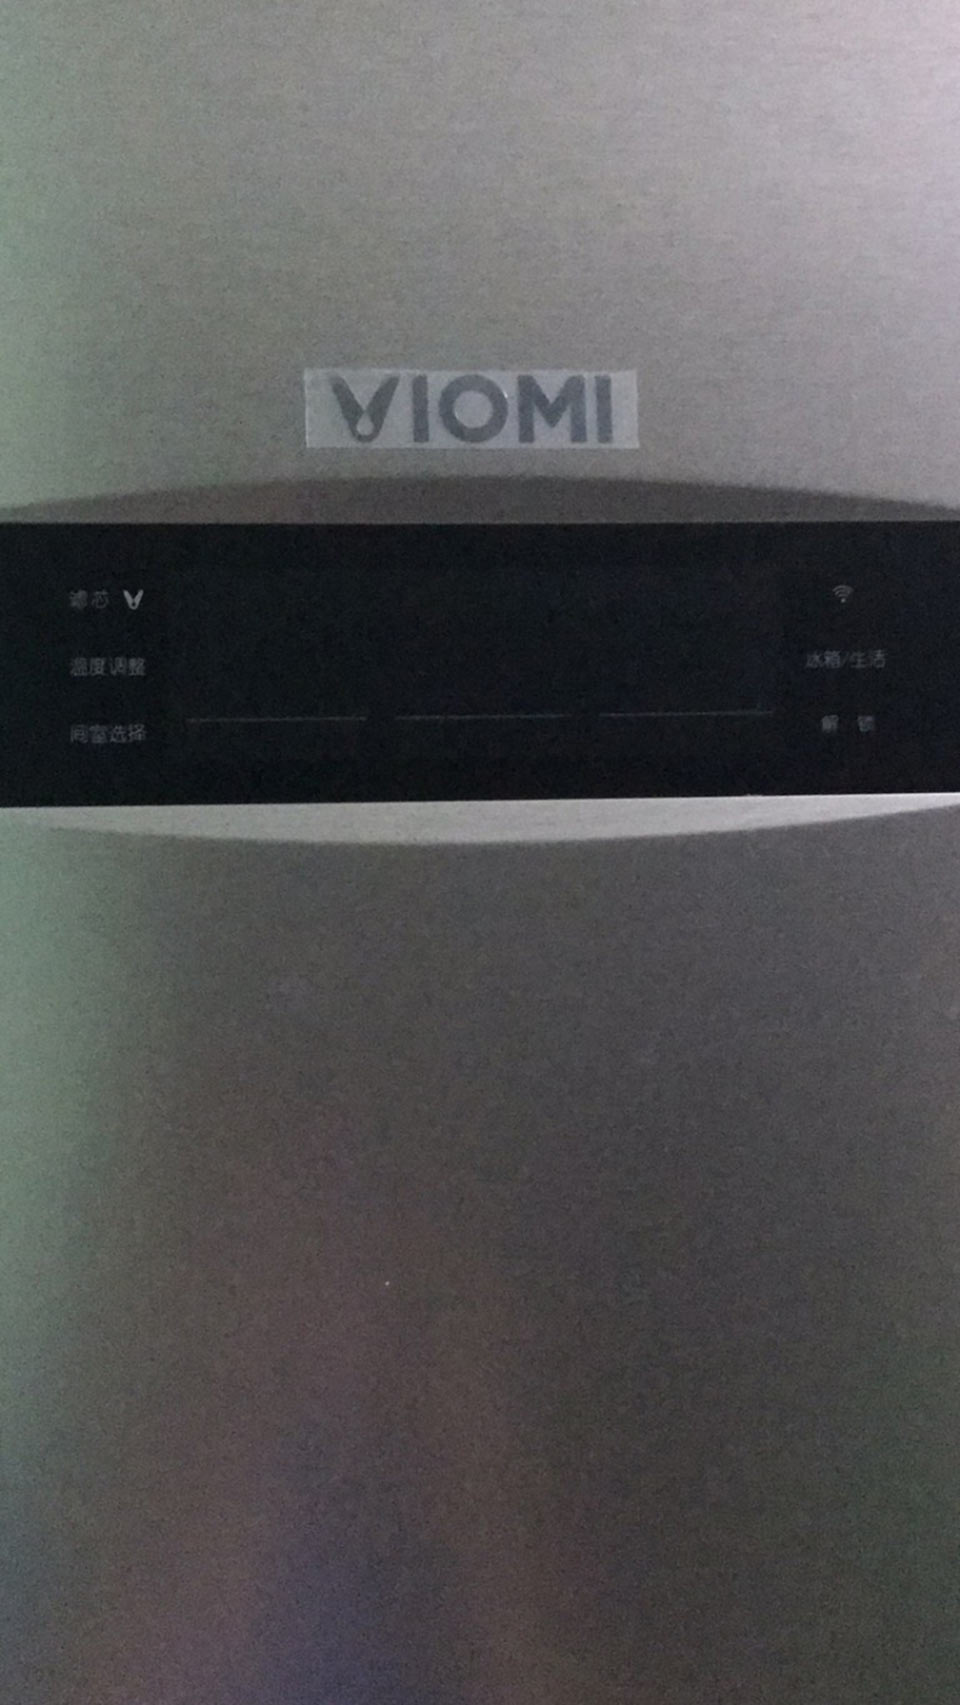 Viomi Smart Refrigerator iLive Edition дисплей